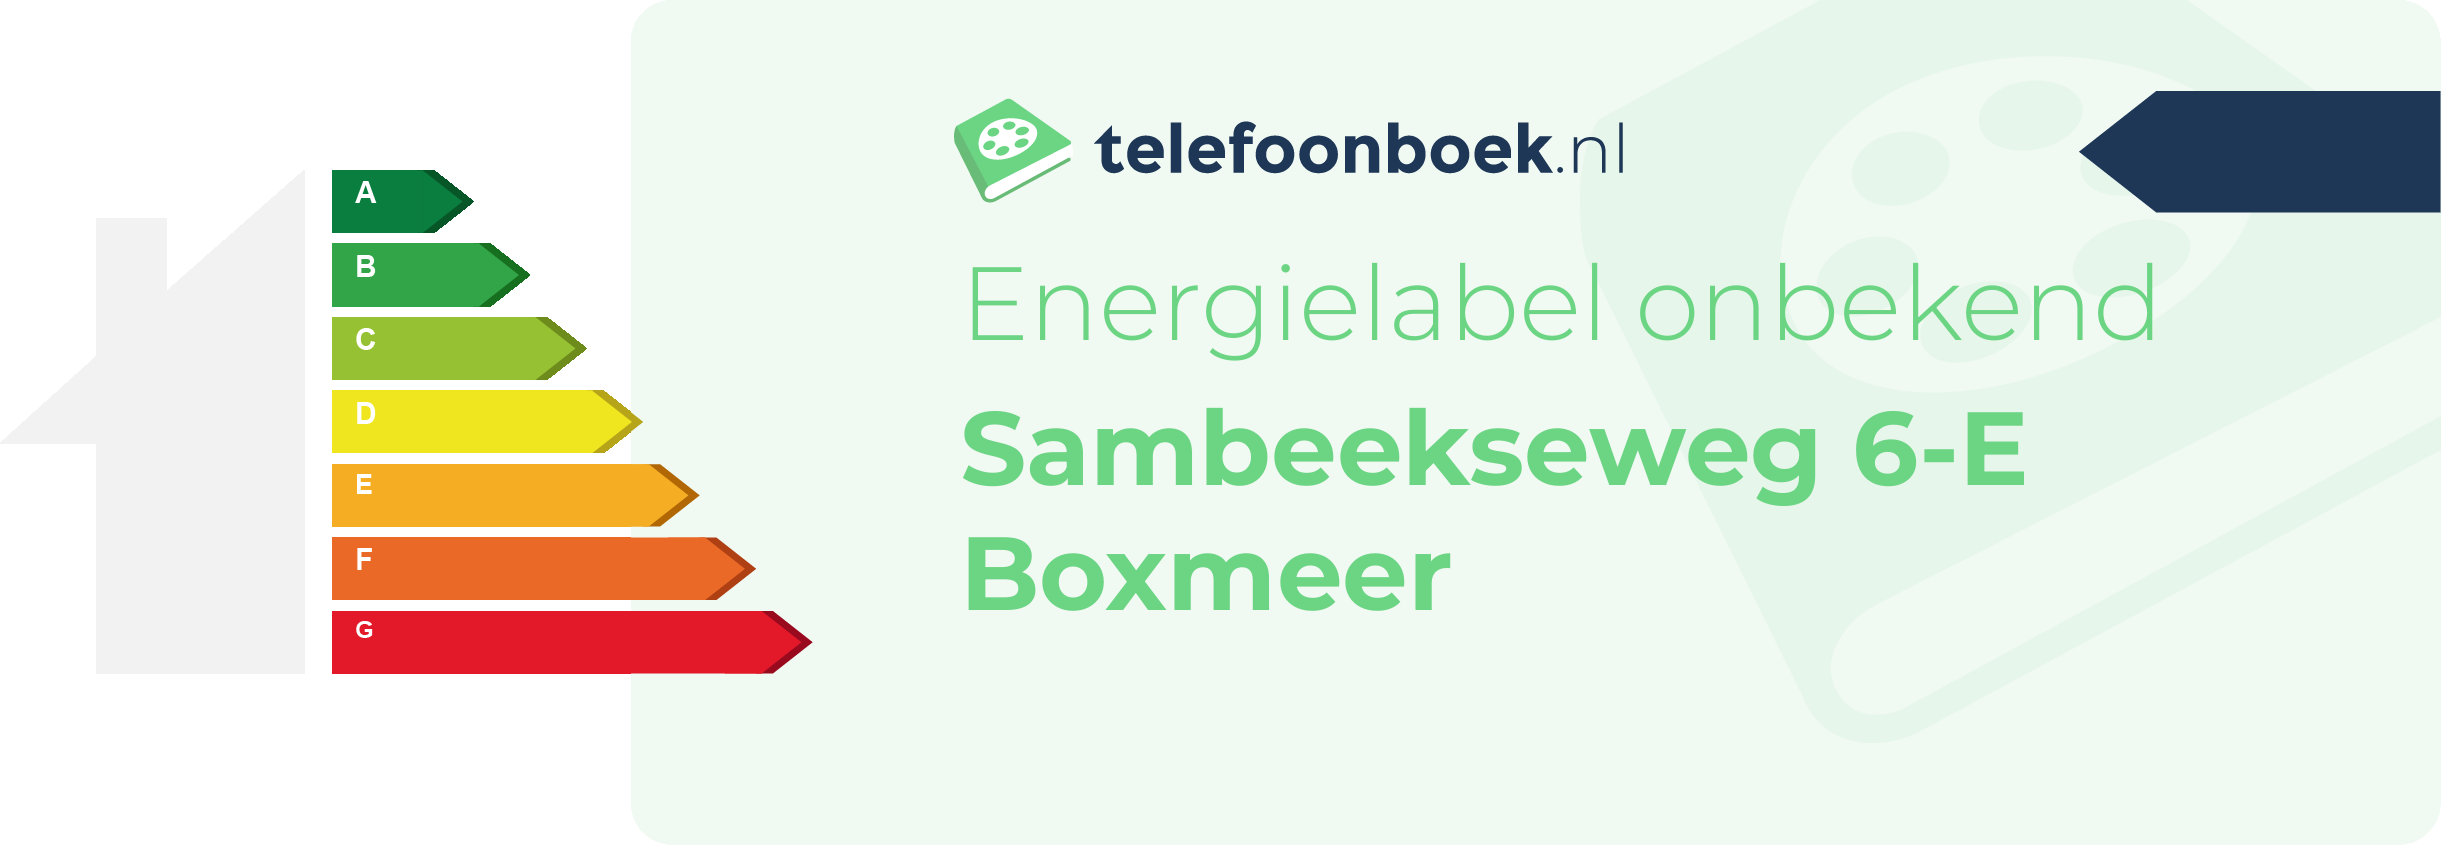 Energielabel Sambeekseweg 6-E Boxmeer